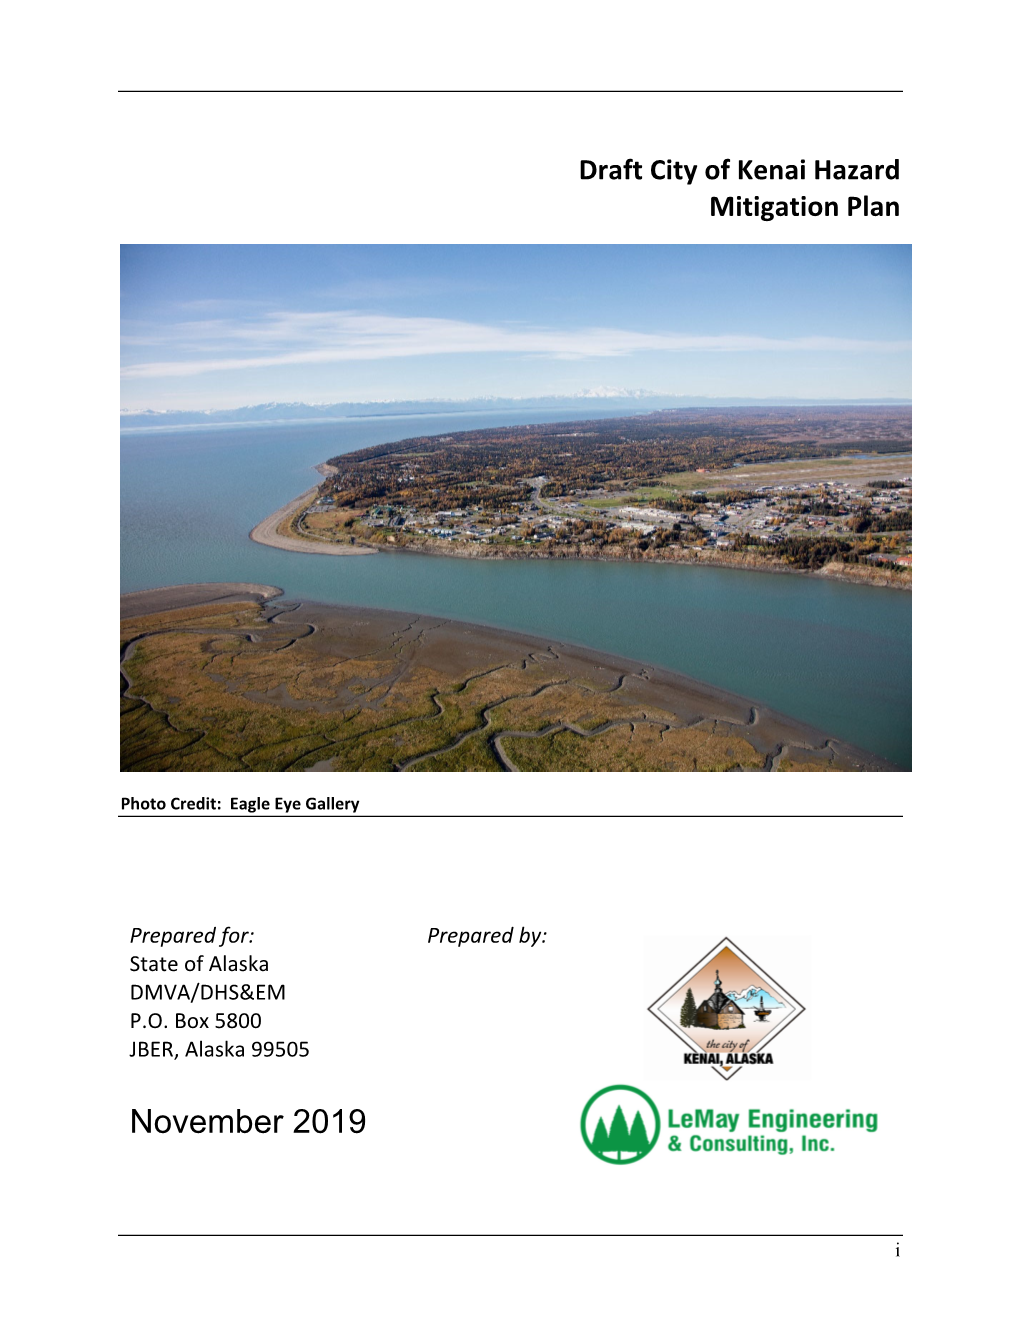 Nov. 2019 DRAFT City of Kenai Hazard Mitigation Plan